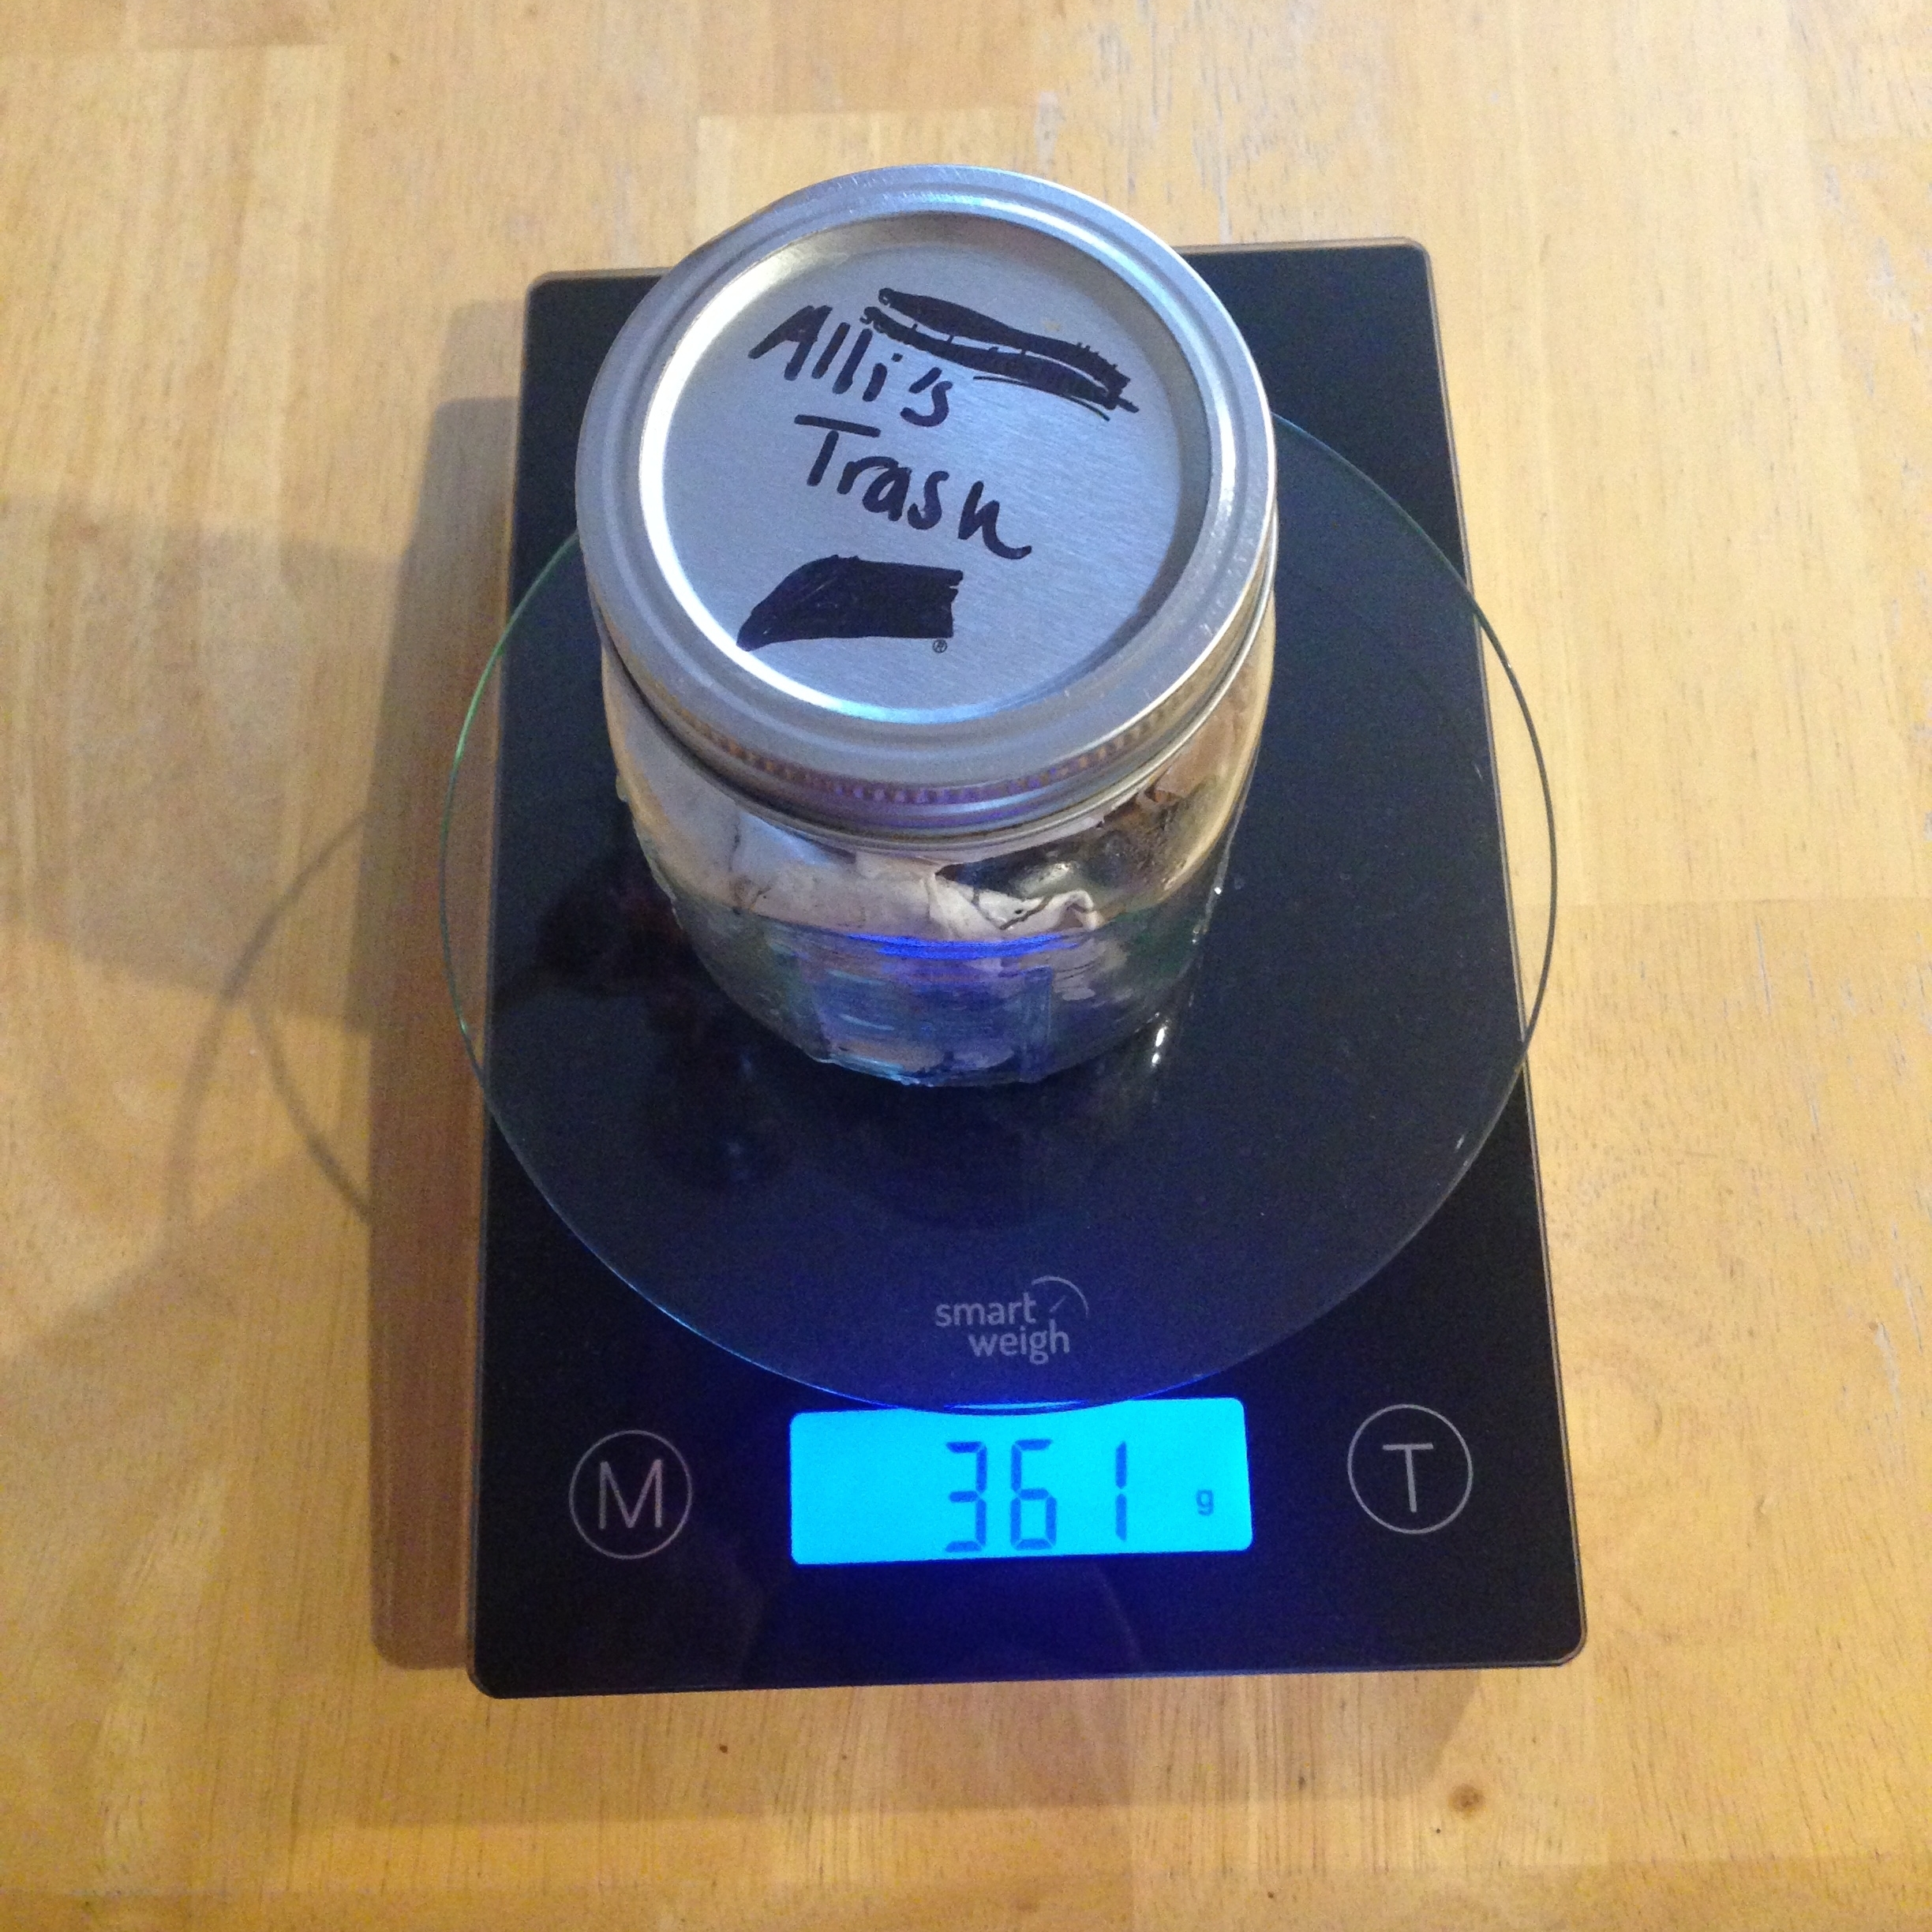 My full mason jar of trash weighing 361g